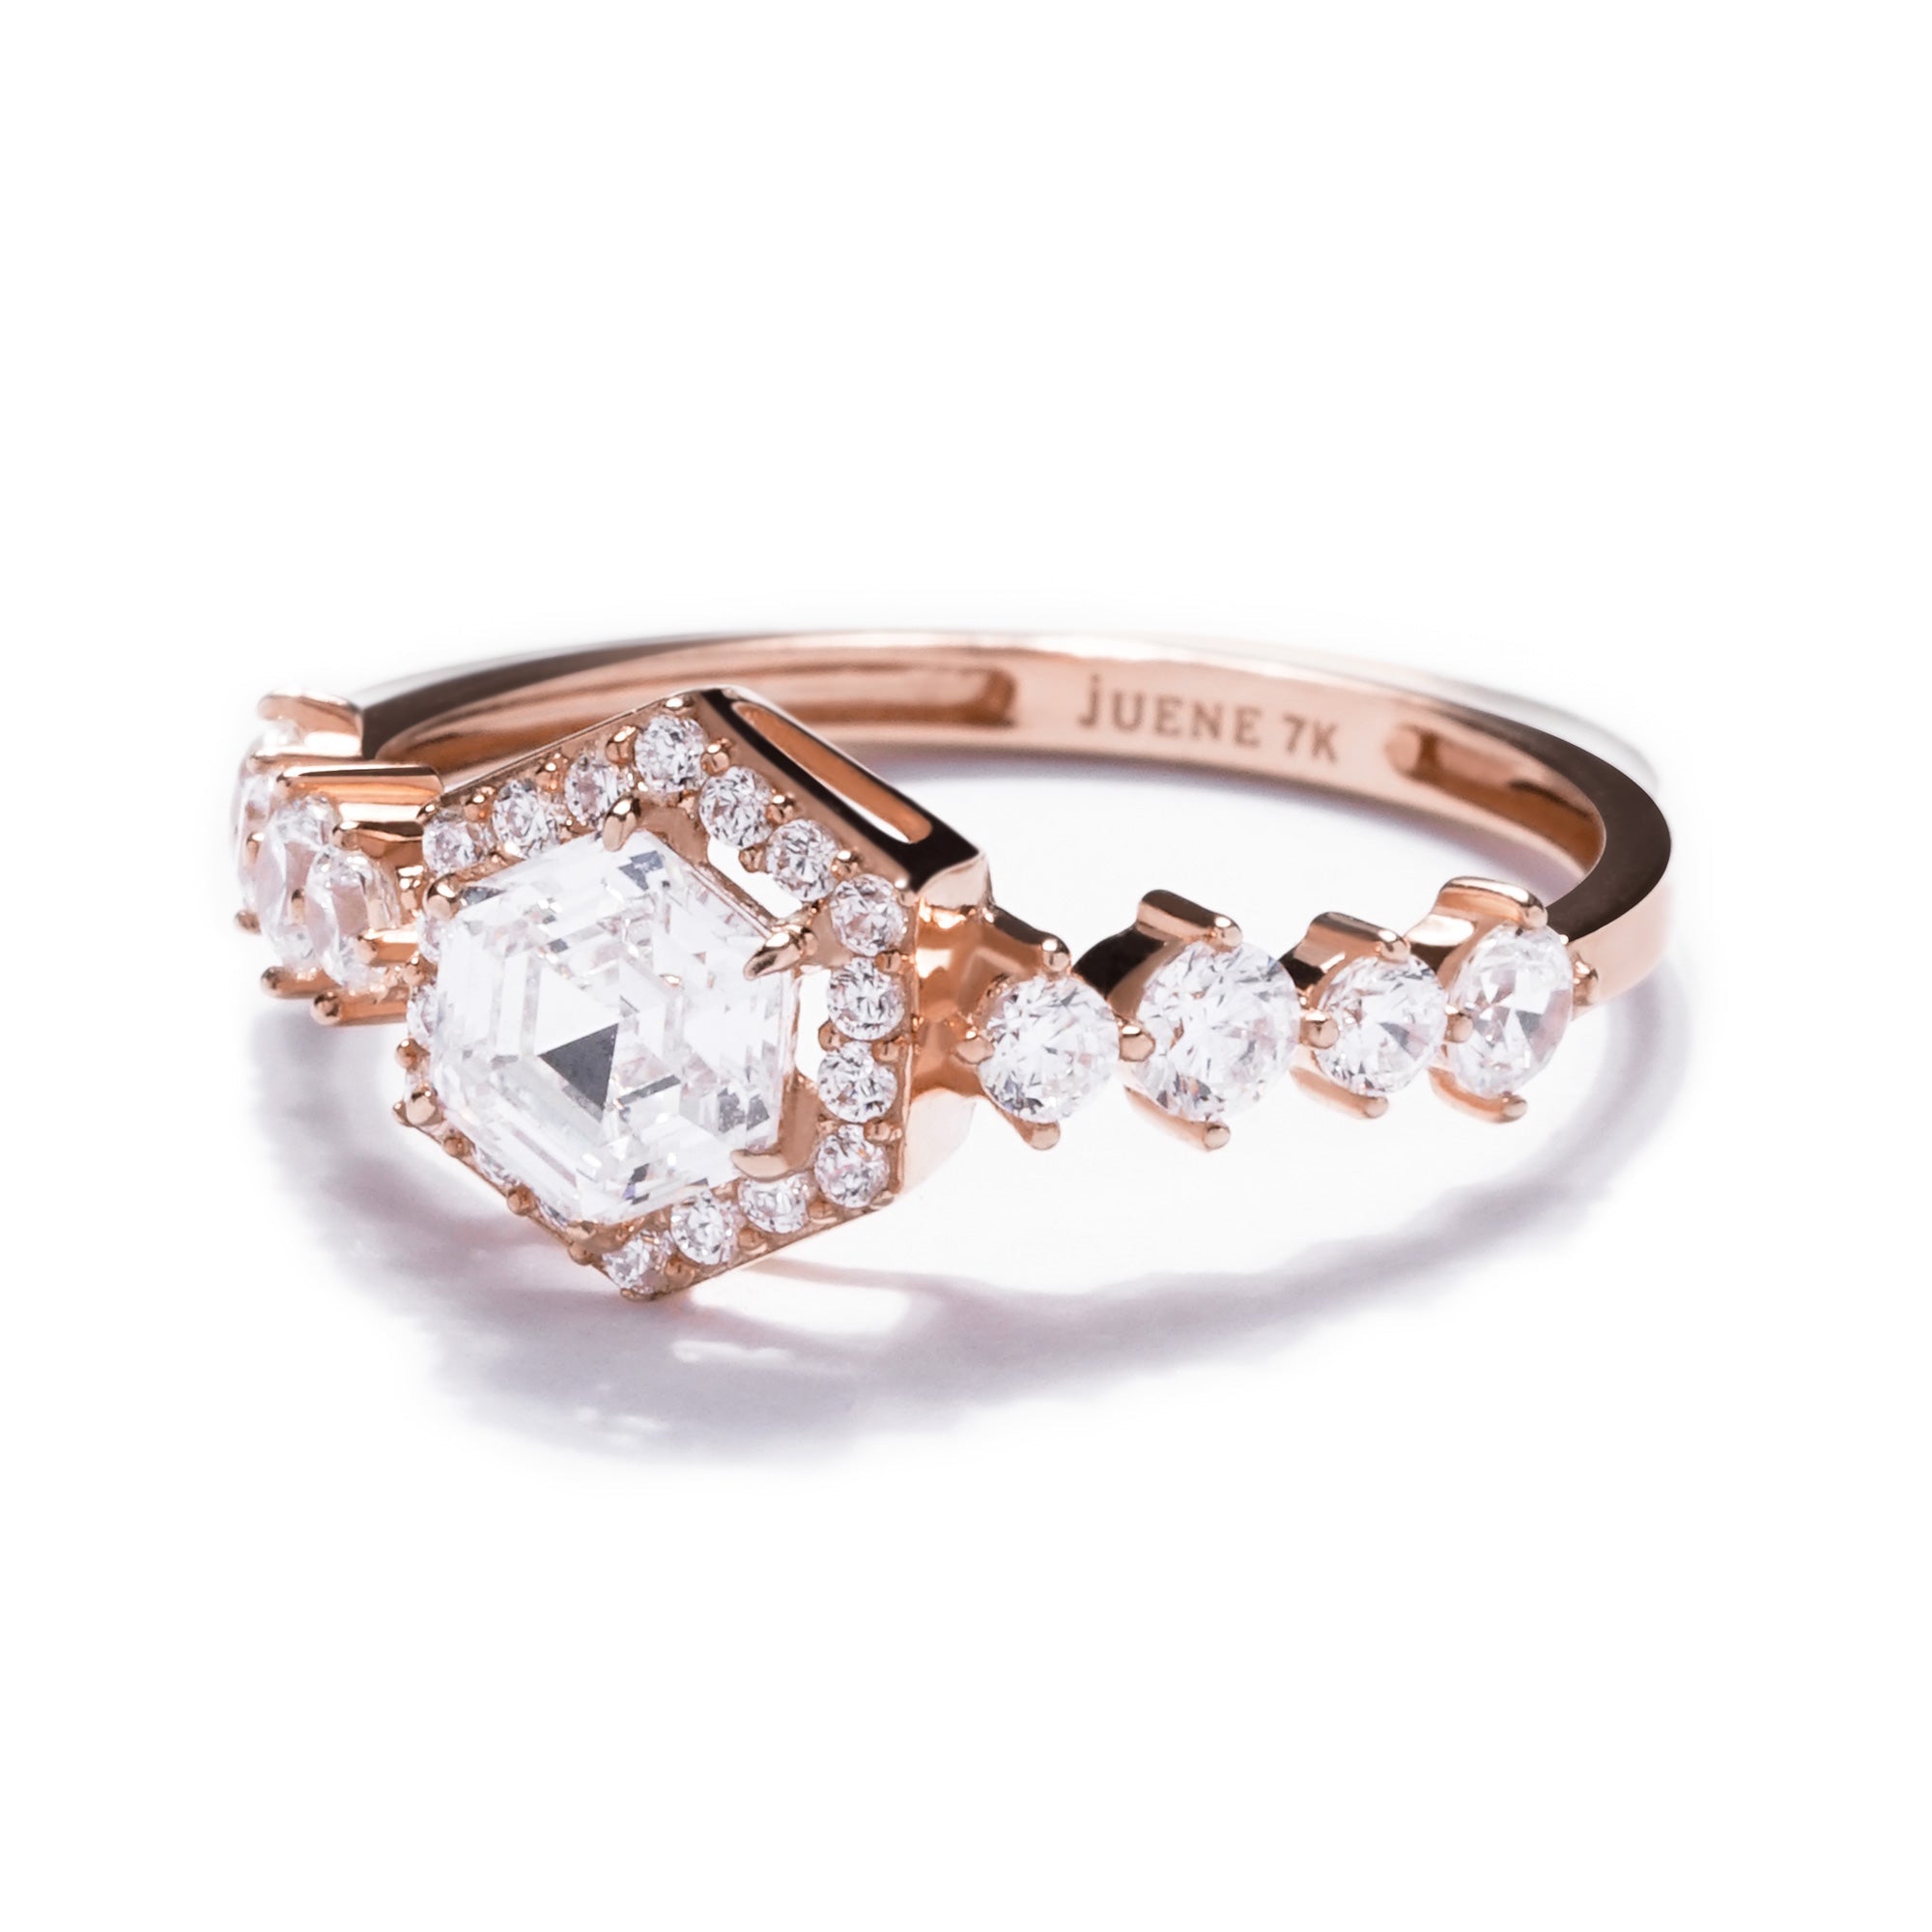 Rilla Gold Ring - Sparkle & Joy - Juene Jewelry